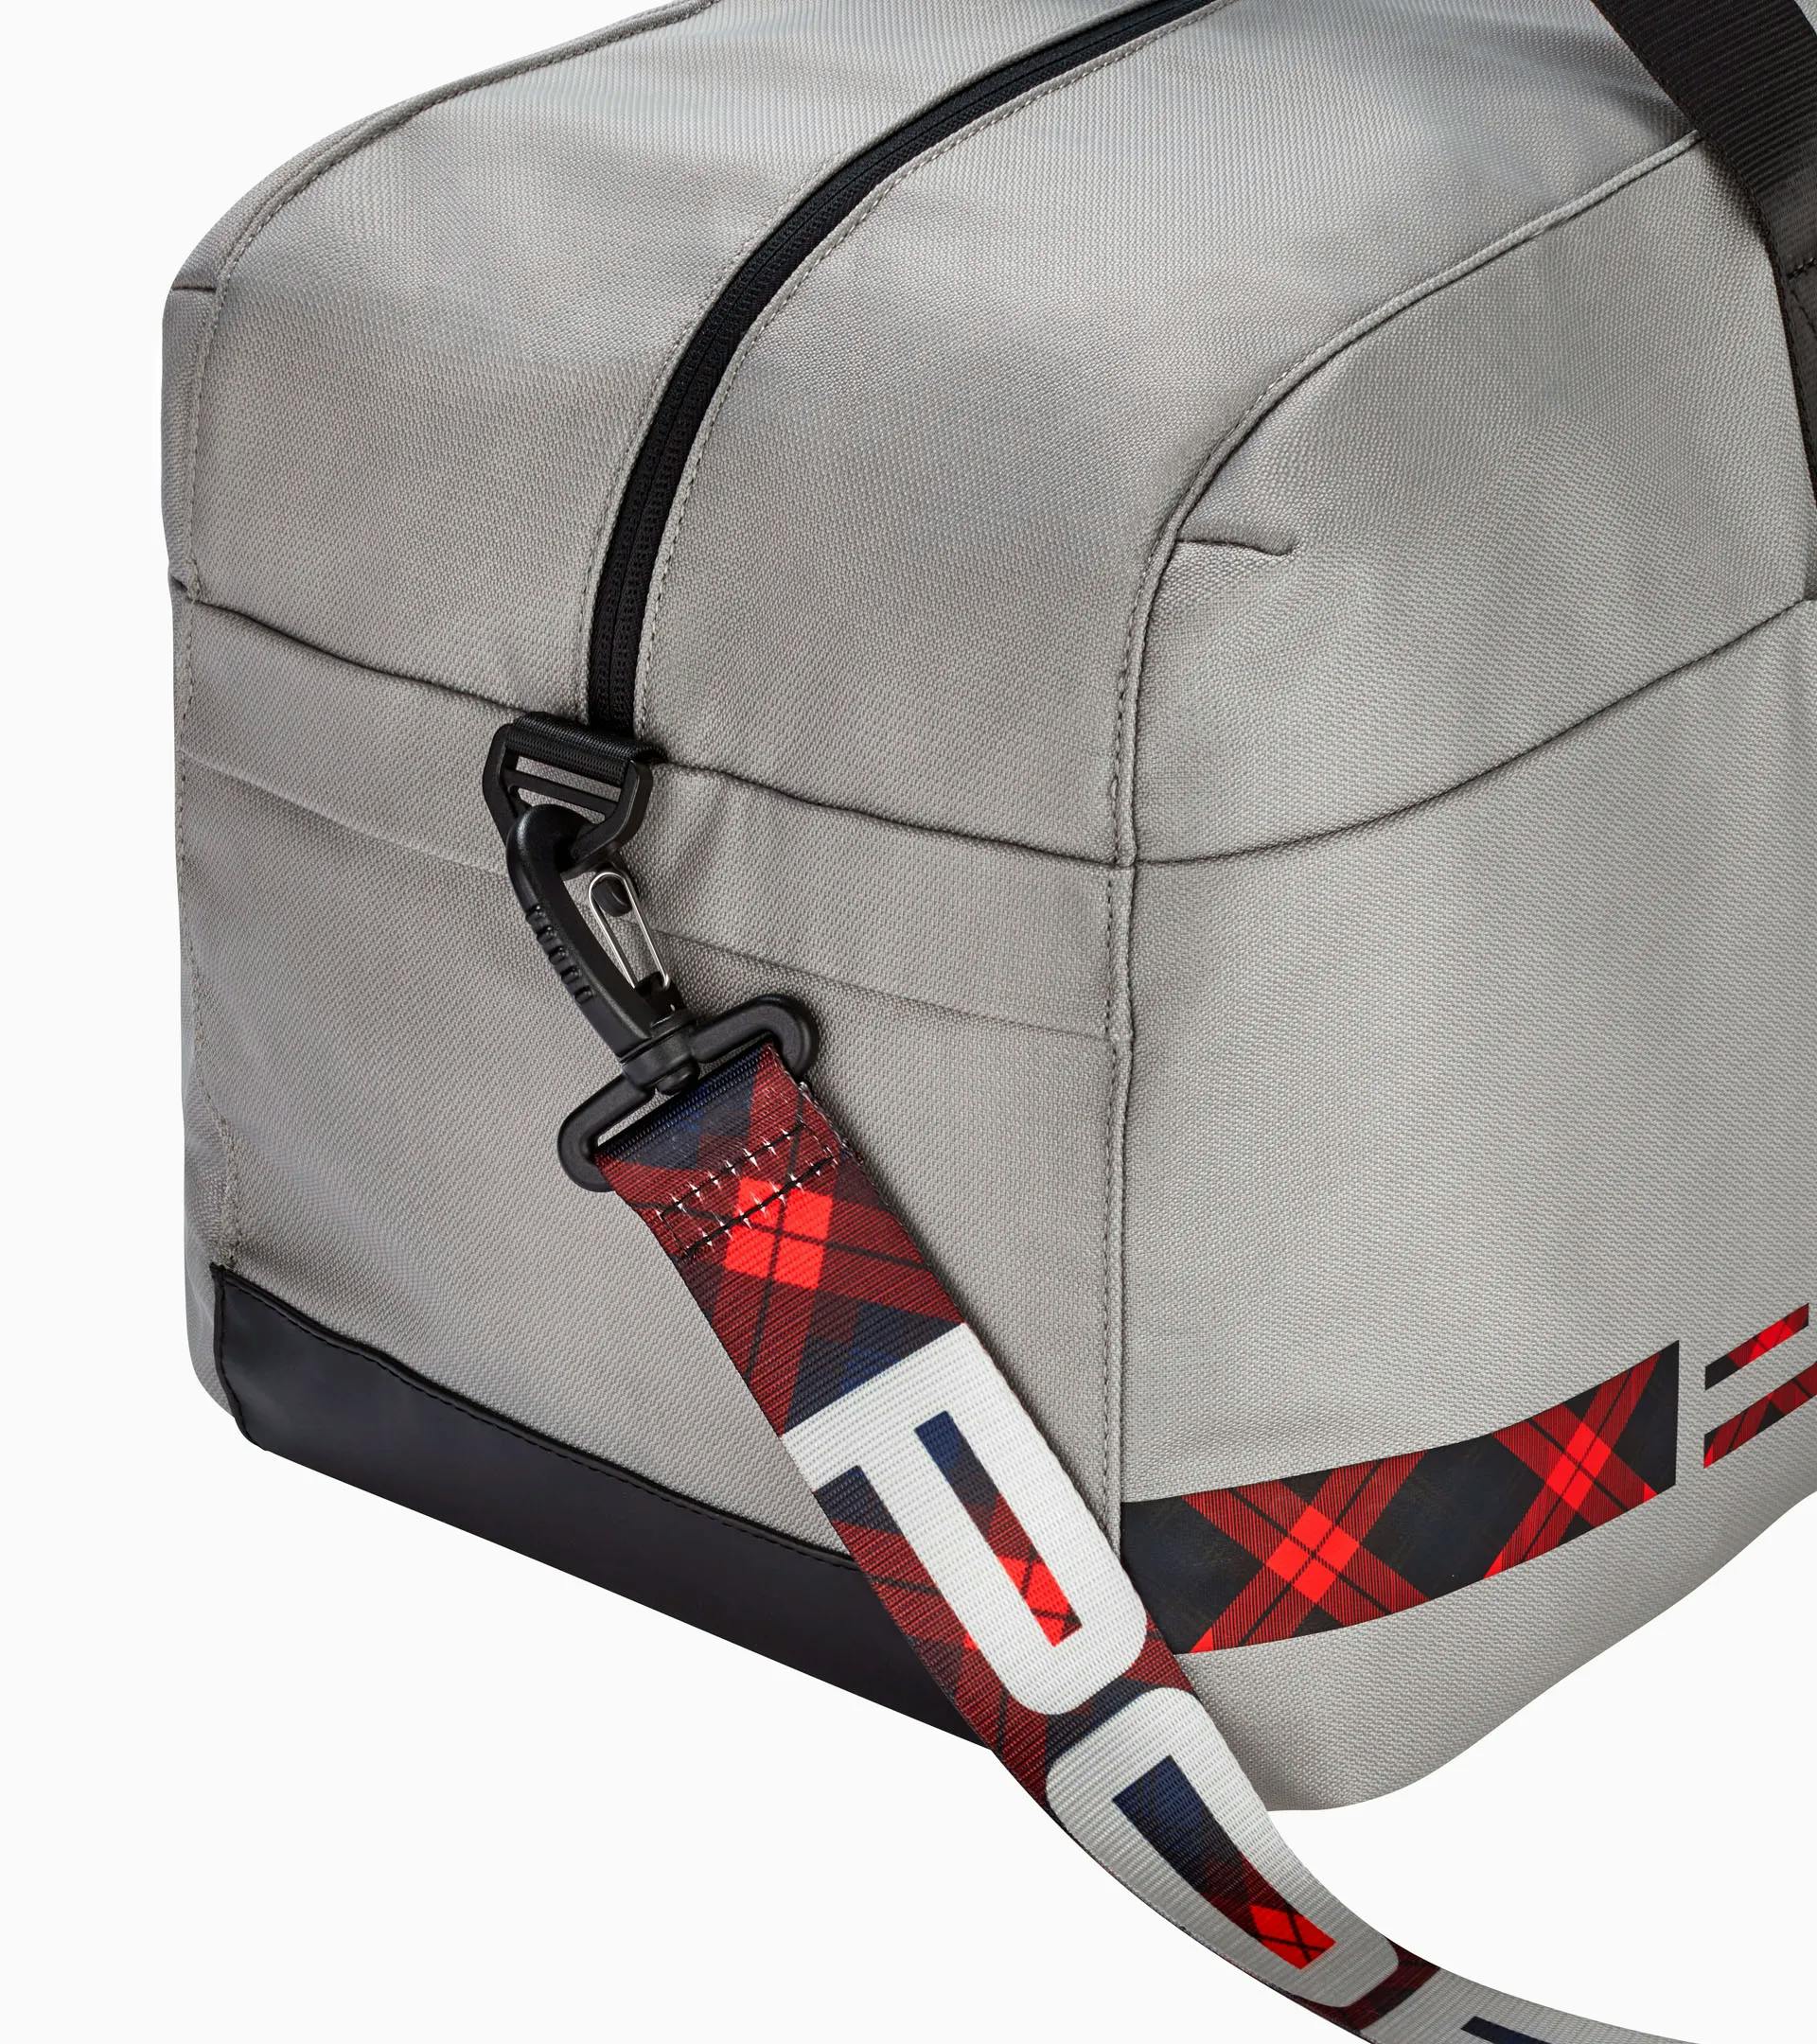 Travel bag – Turbo No. 1 5